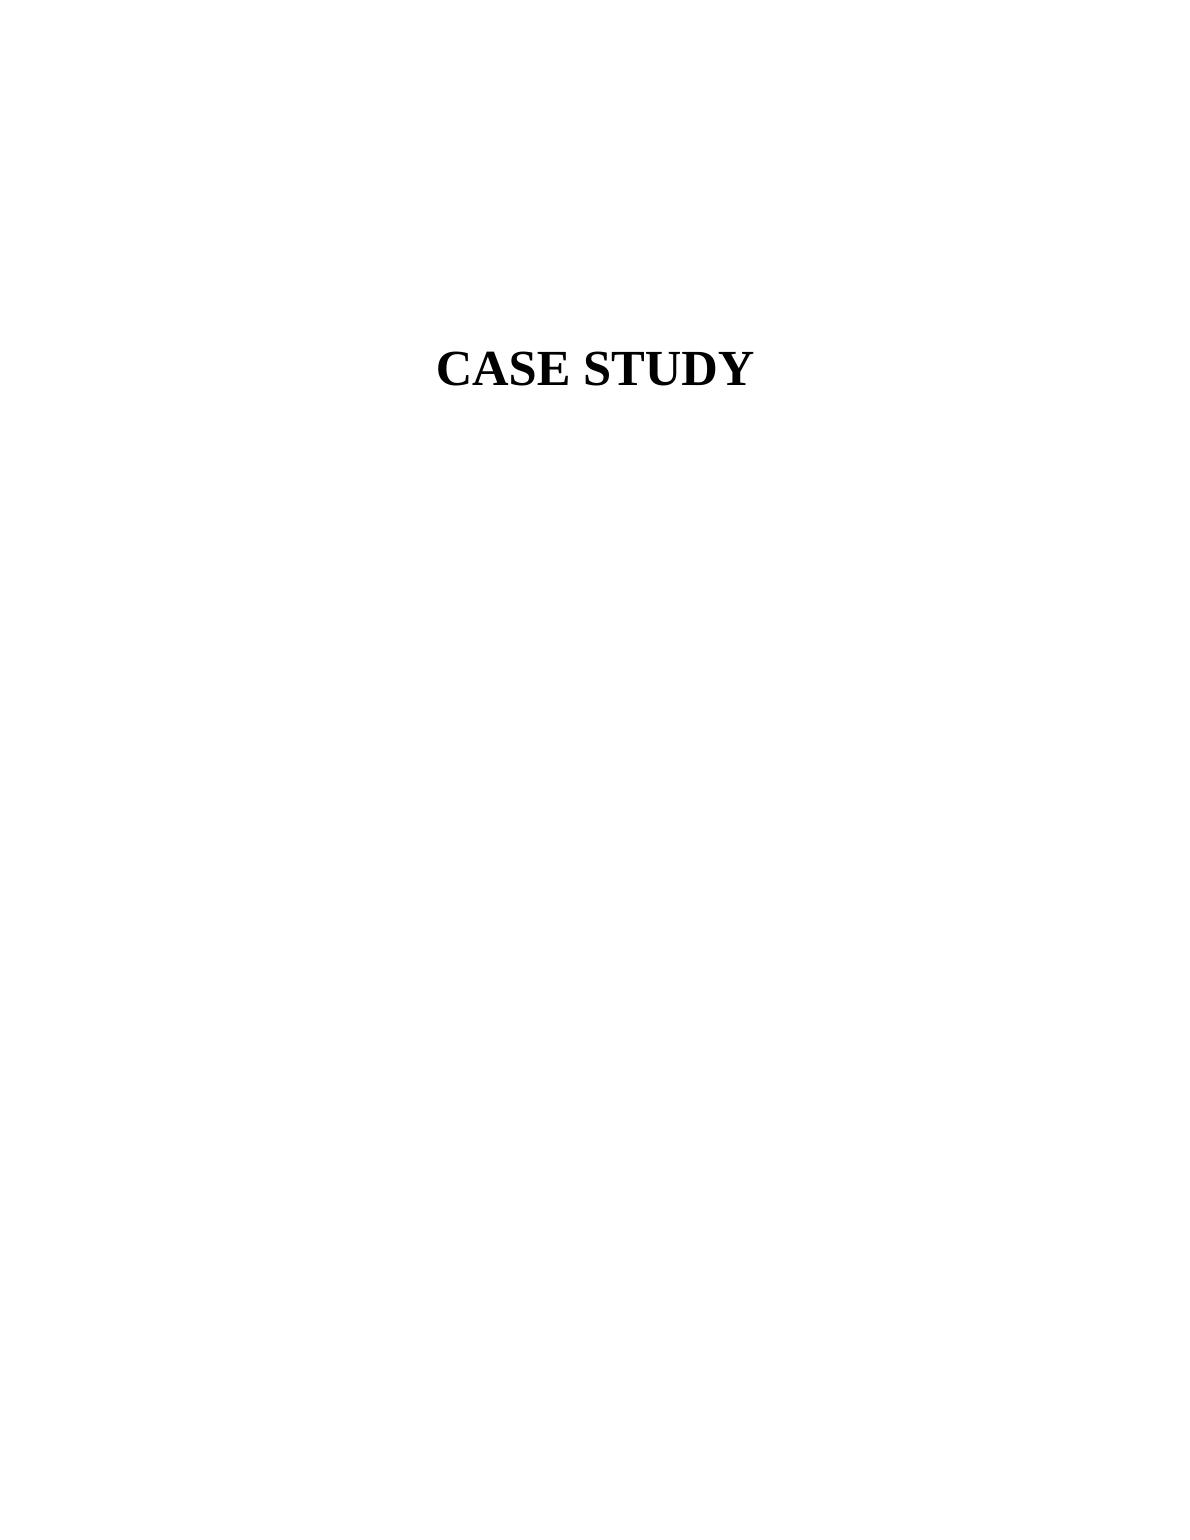 Partnership Case Studies (Doc)_1